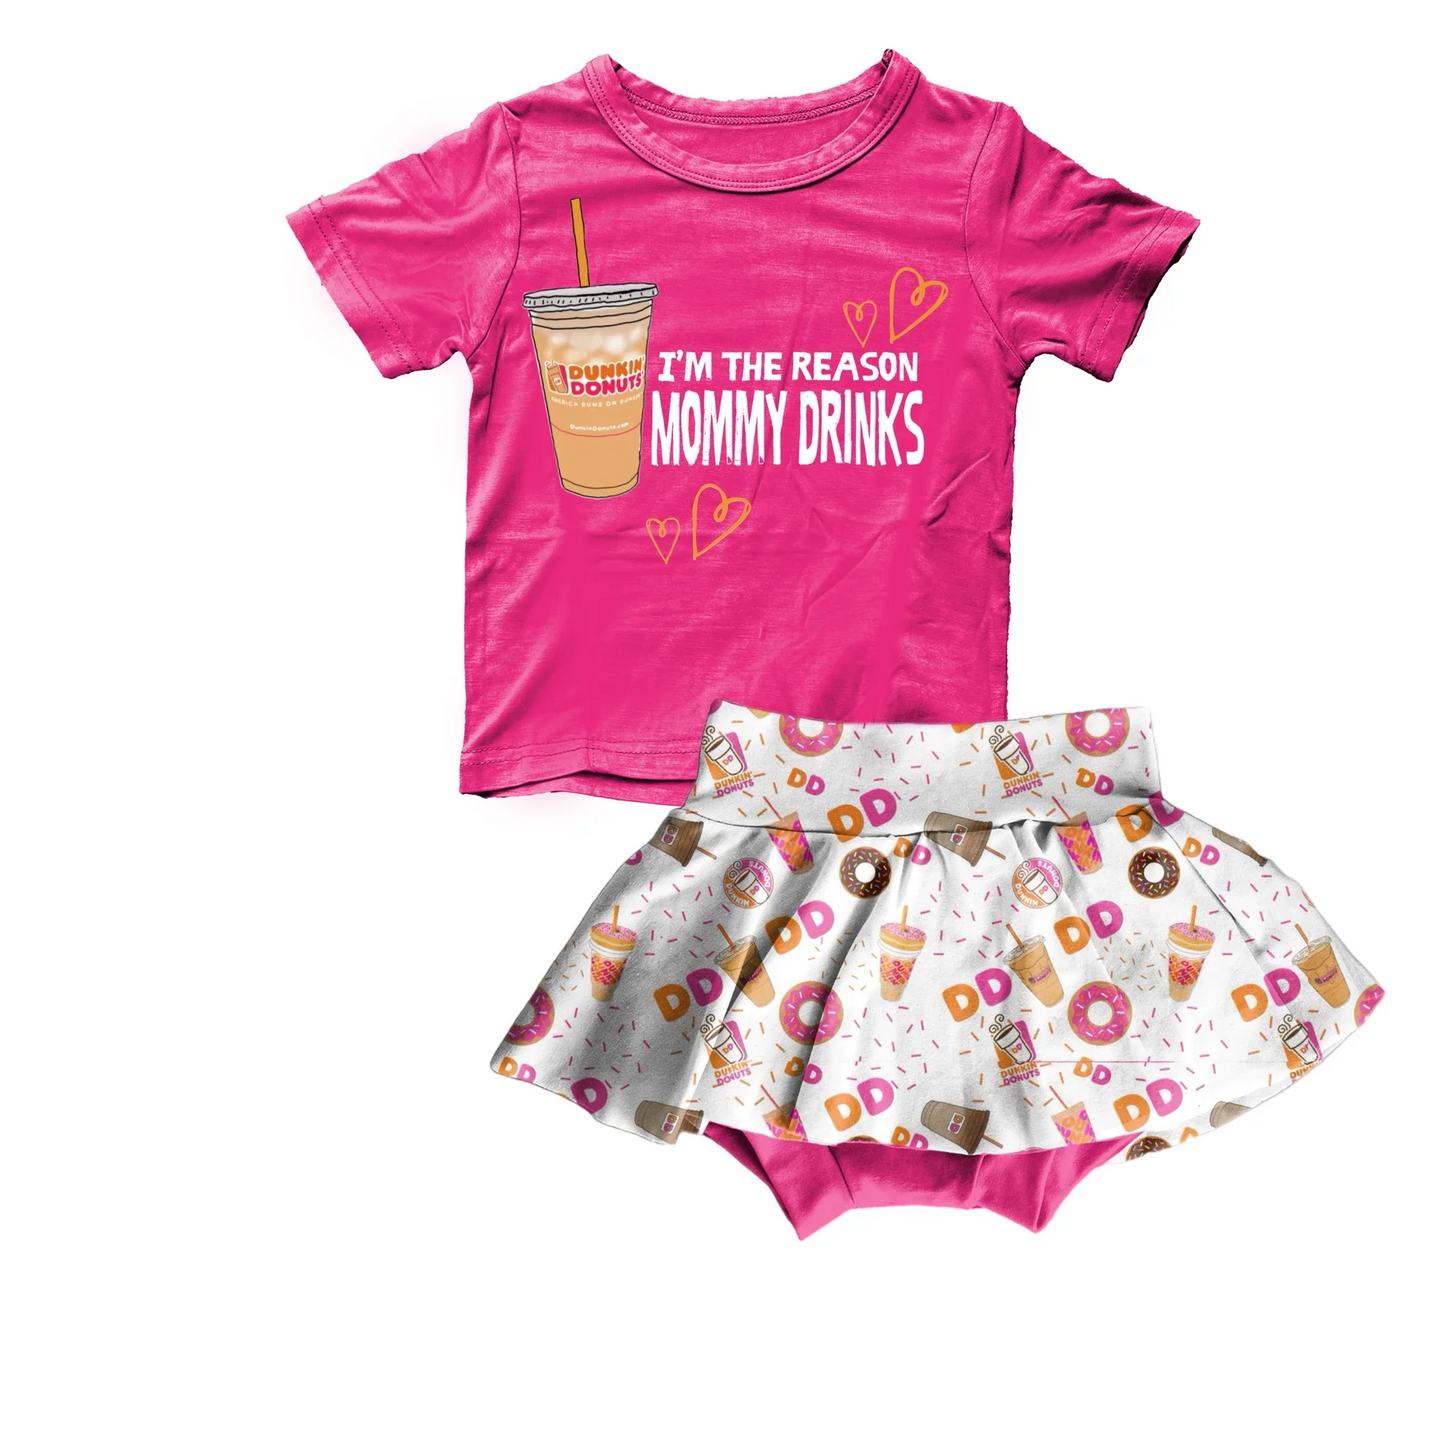 Deadline April 22 Hot pink top donut skirt kids girls clothing